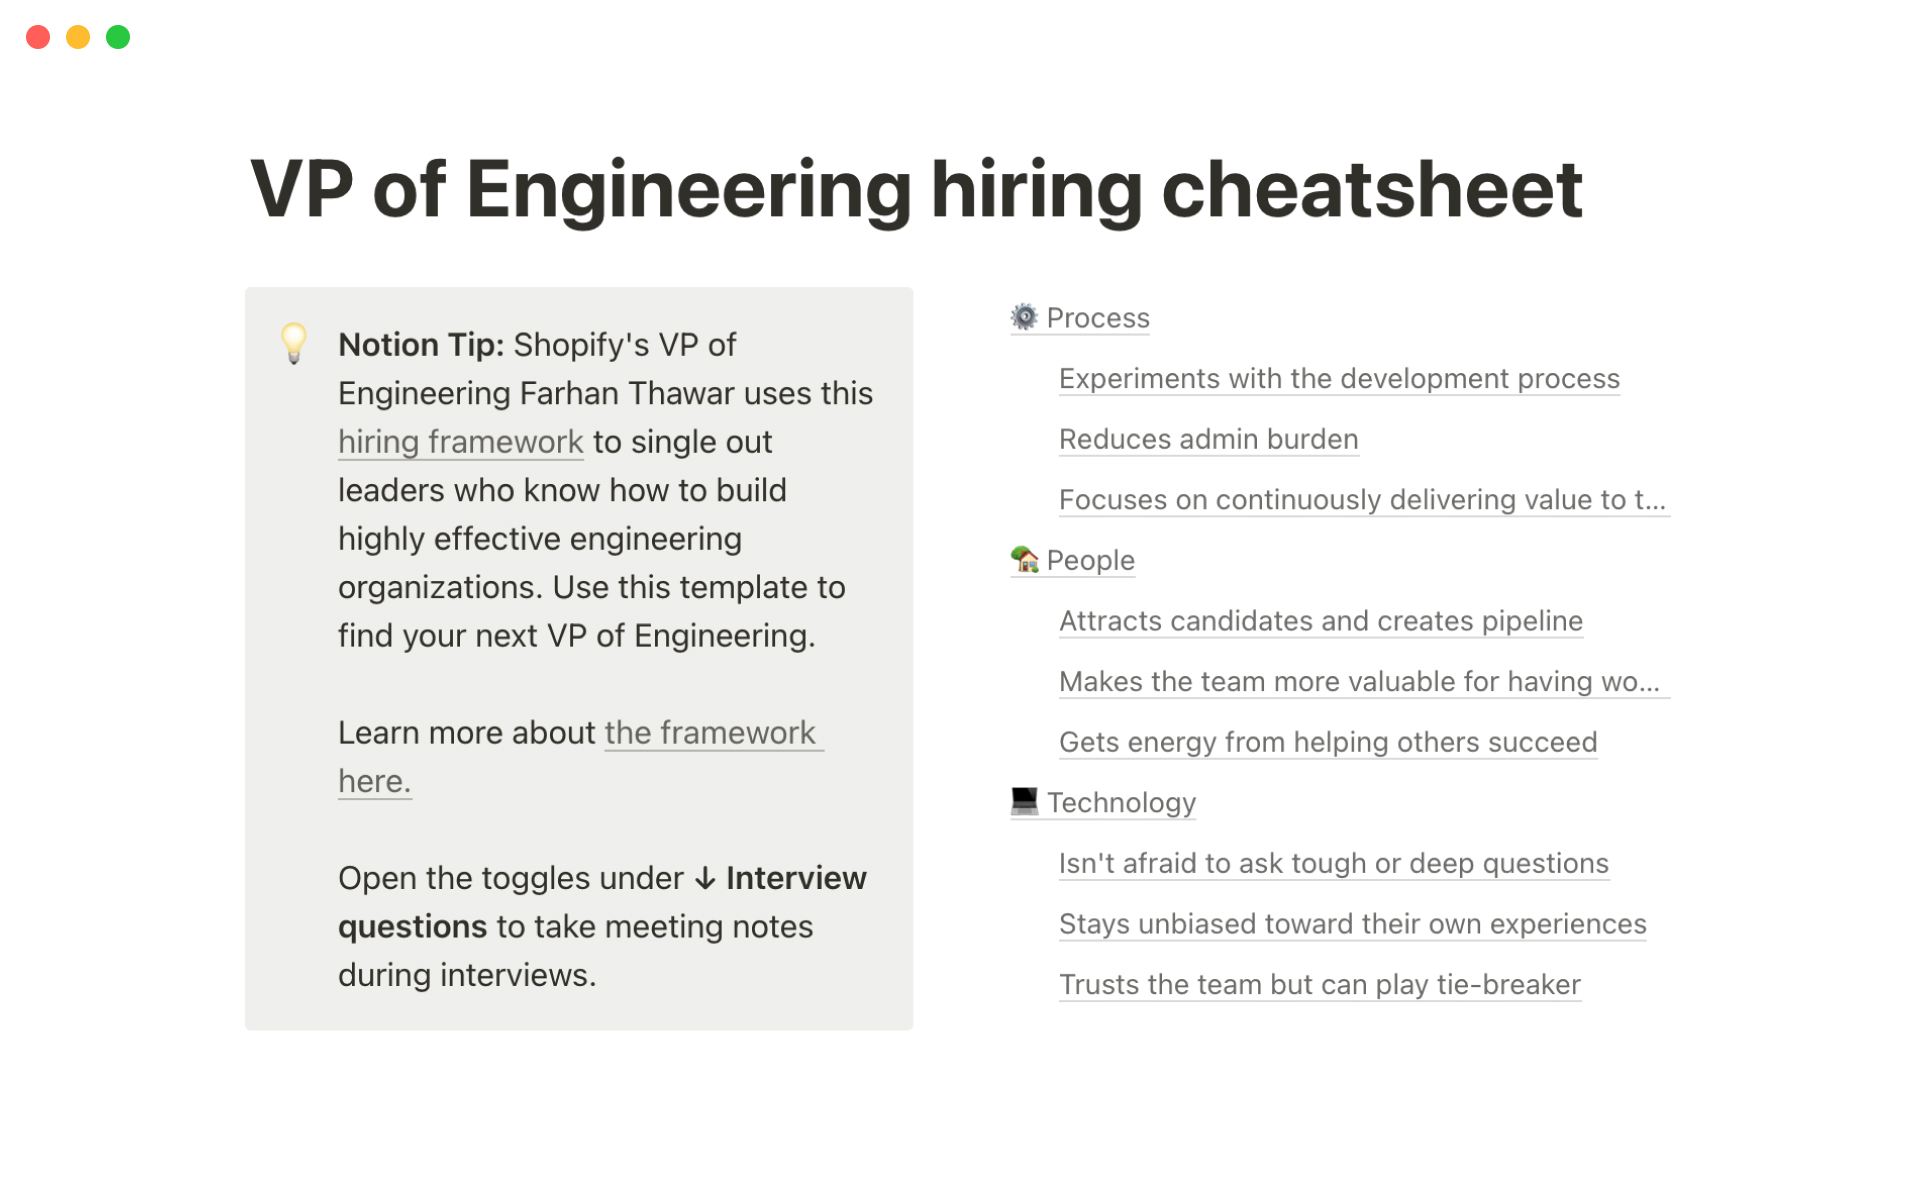 Shopify's VP of Engineering hiring cheatsheet님의 템플릿 미리보기